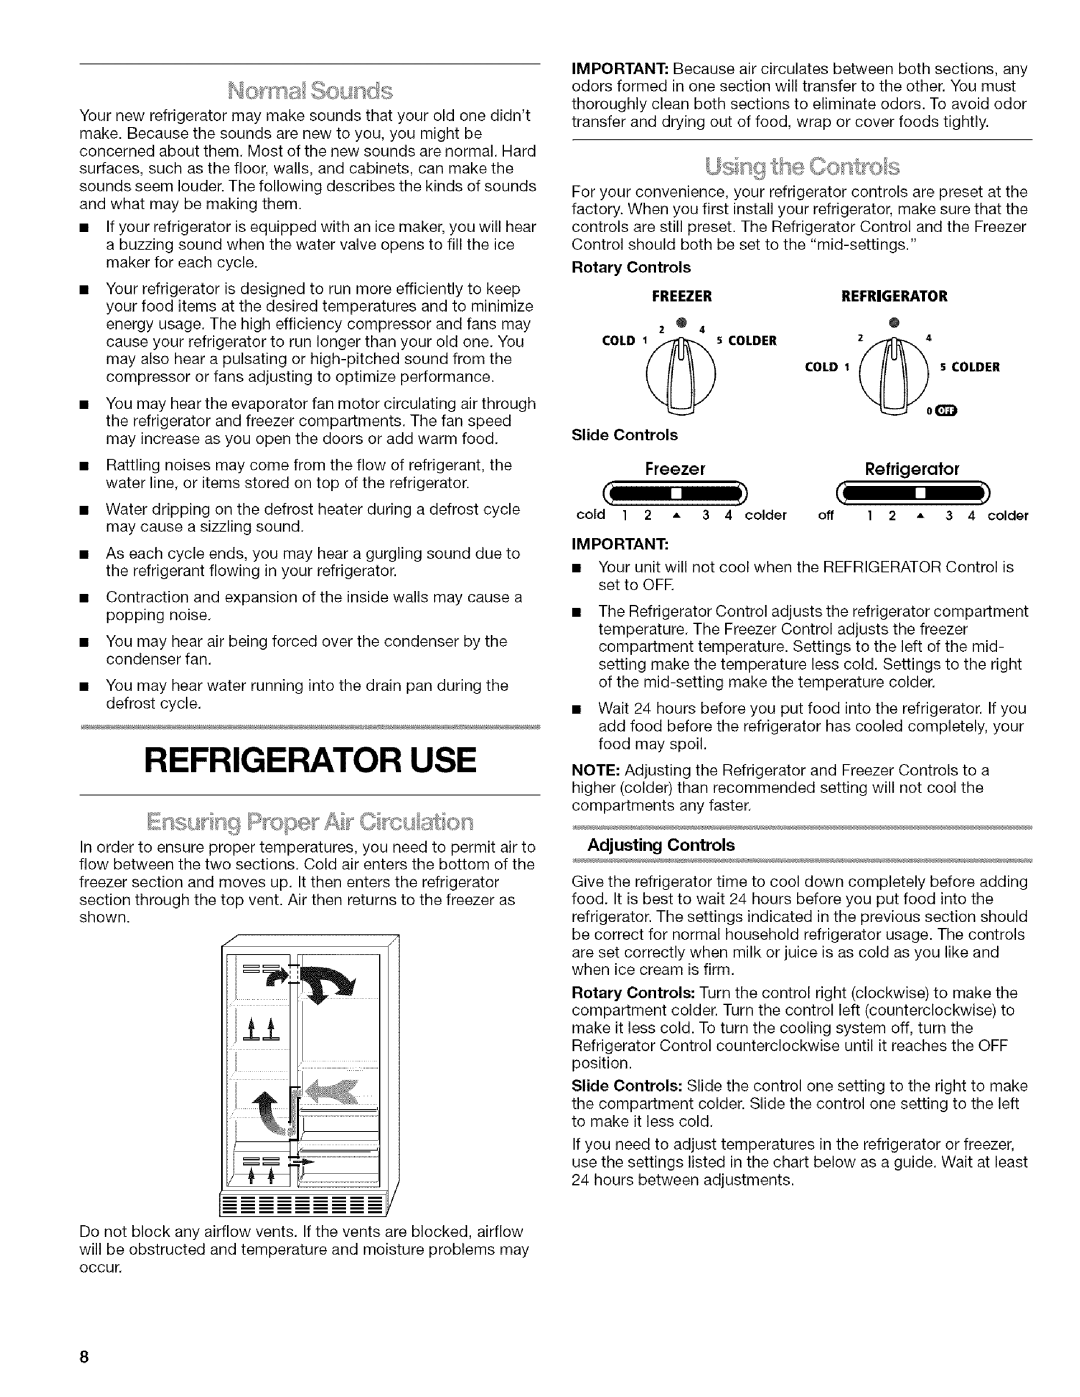 Kenmore w10144349A manual Refrigerator Use 